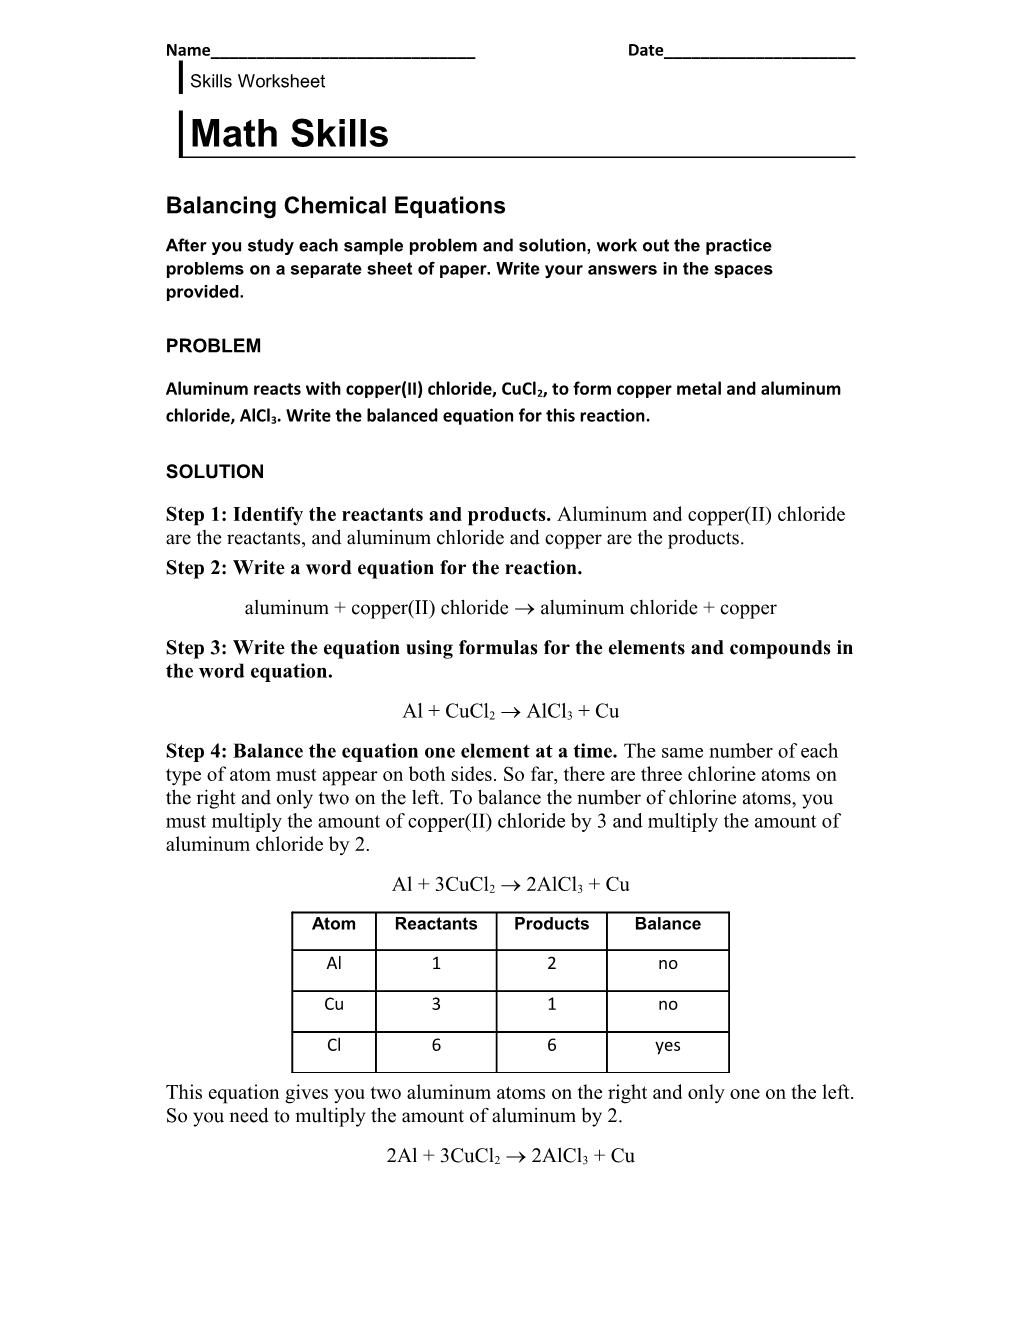 Balancing Chemical Equations s1